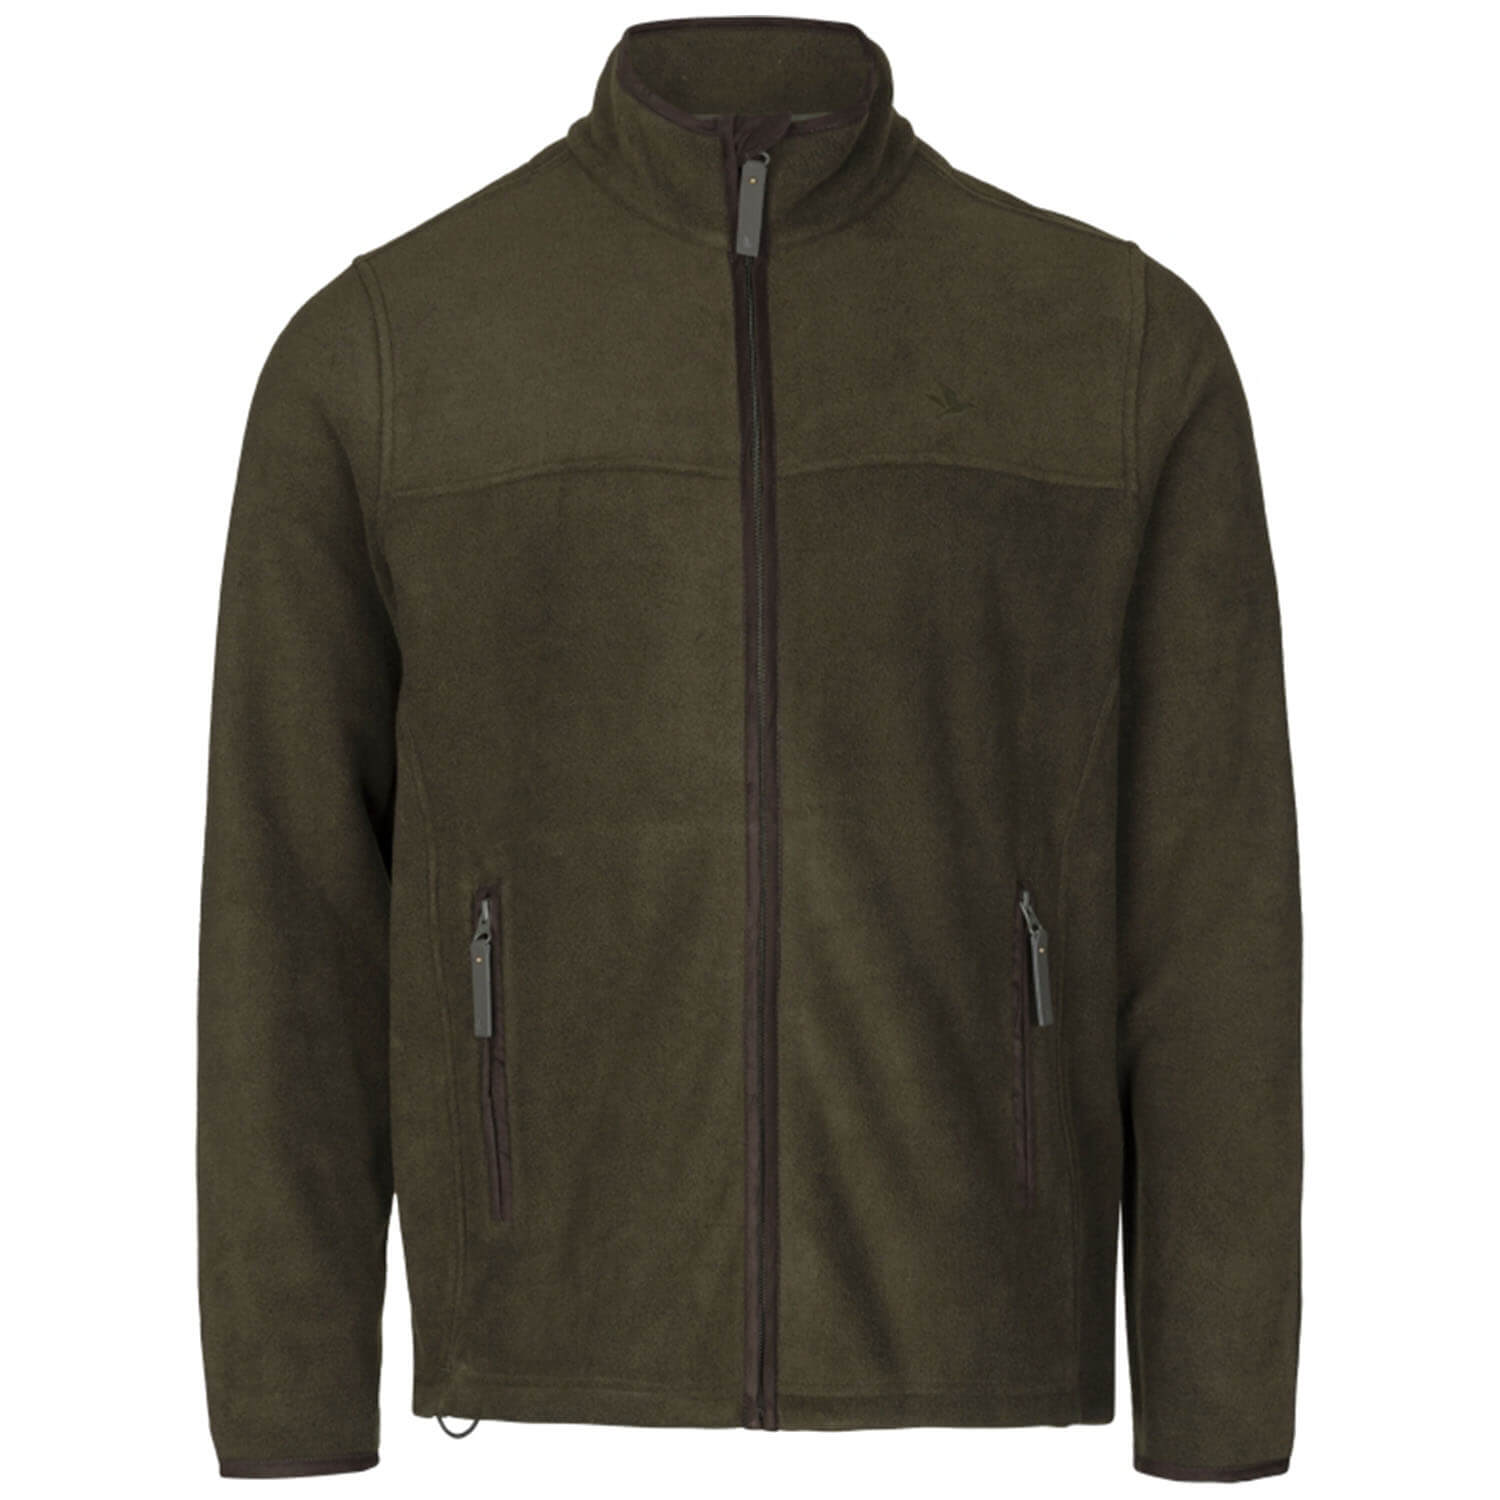  Seeland fleece jacket Woodcock Earl (Pine Green Melange) - Hunting Jackets